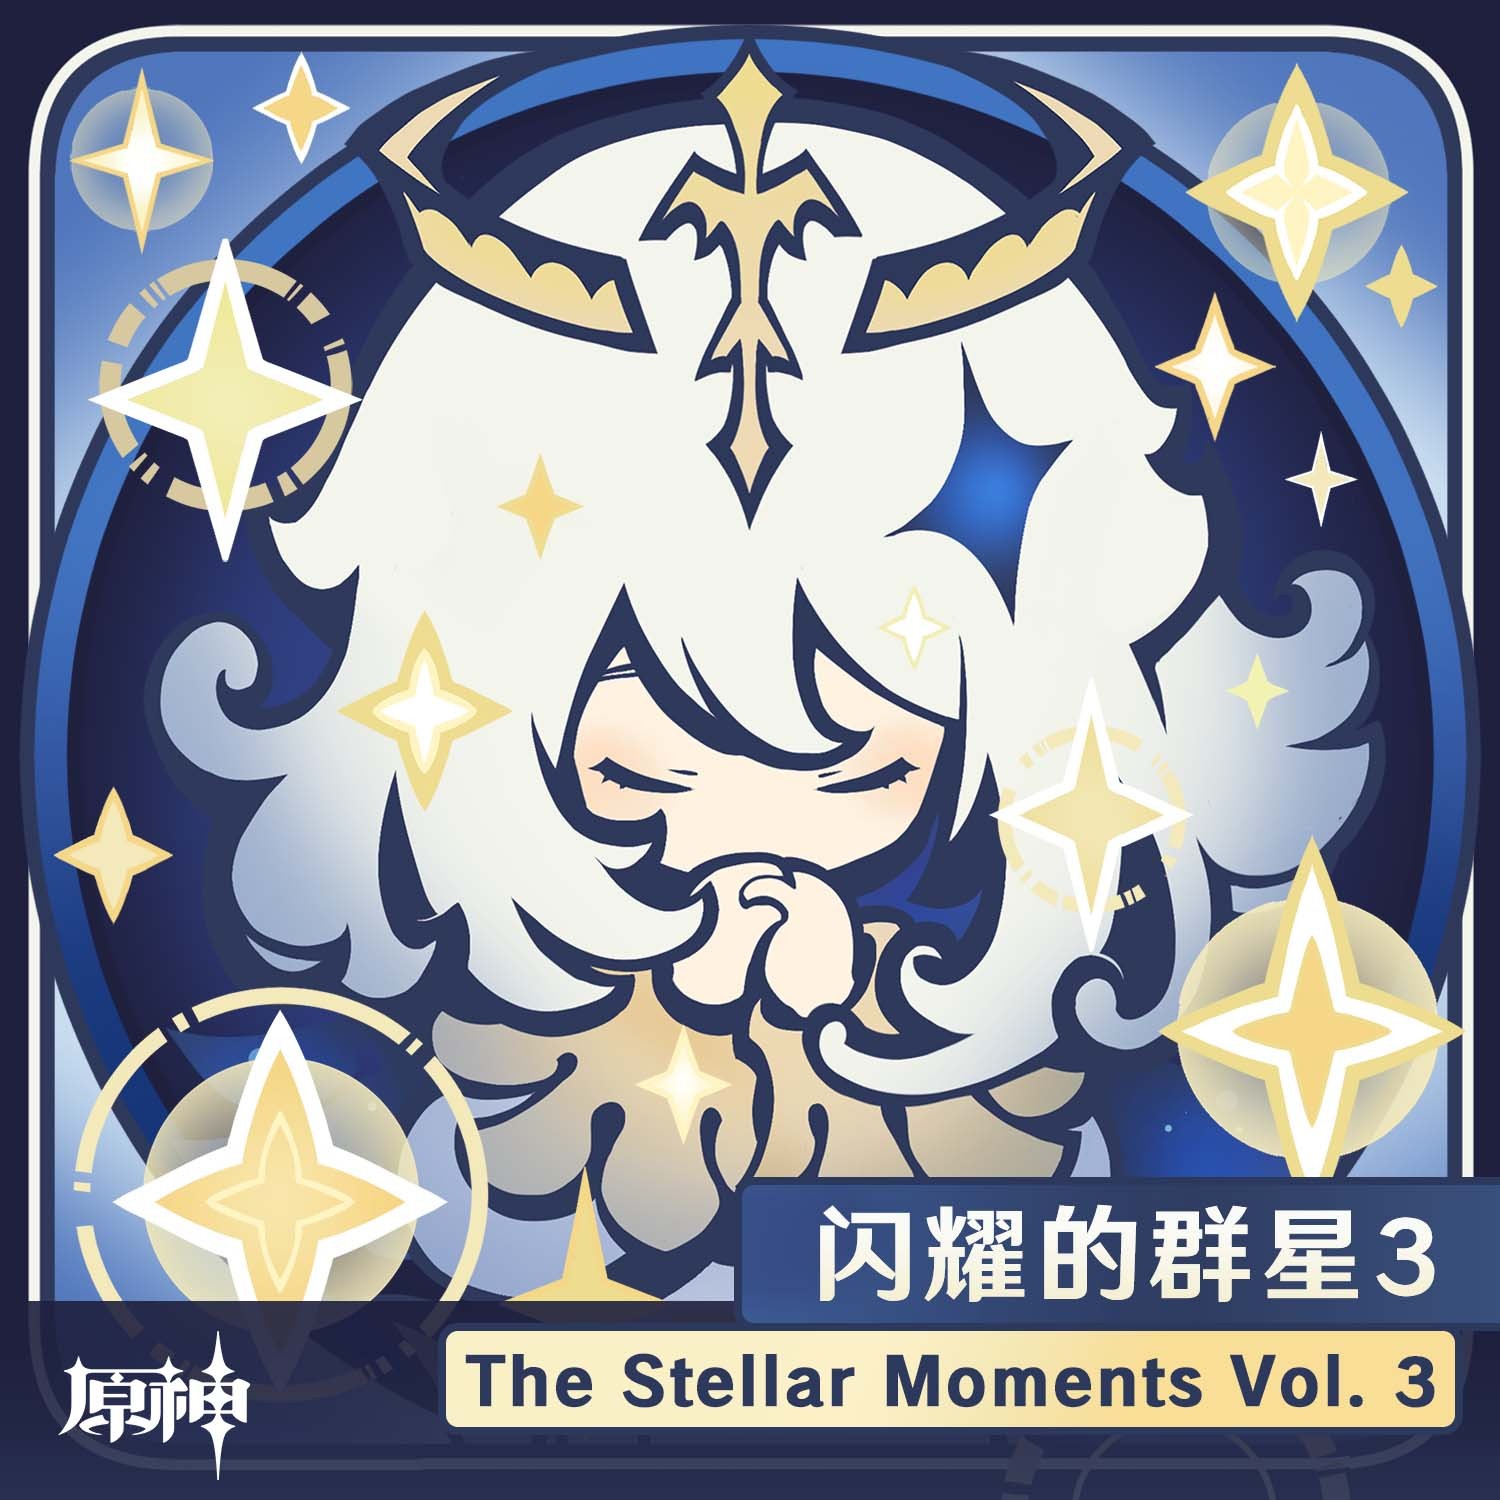 原神 - 闪耀的群星Vol.3 The Stellar Moments Vol.3